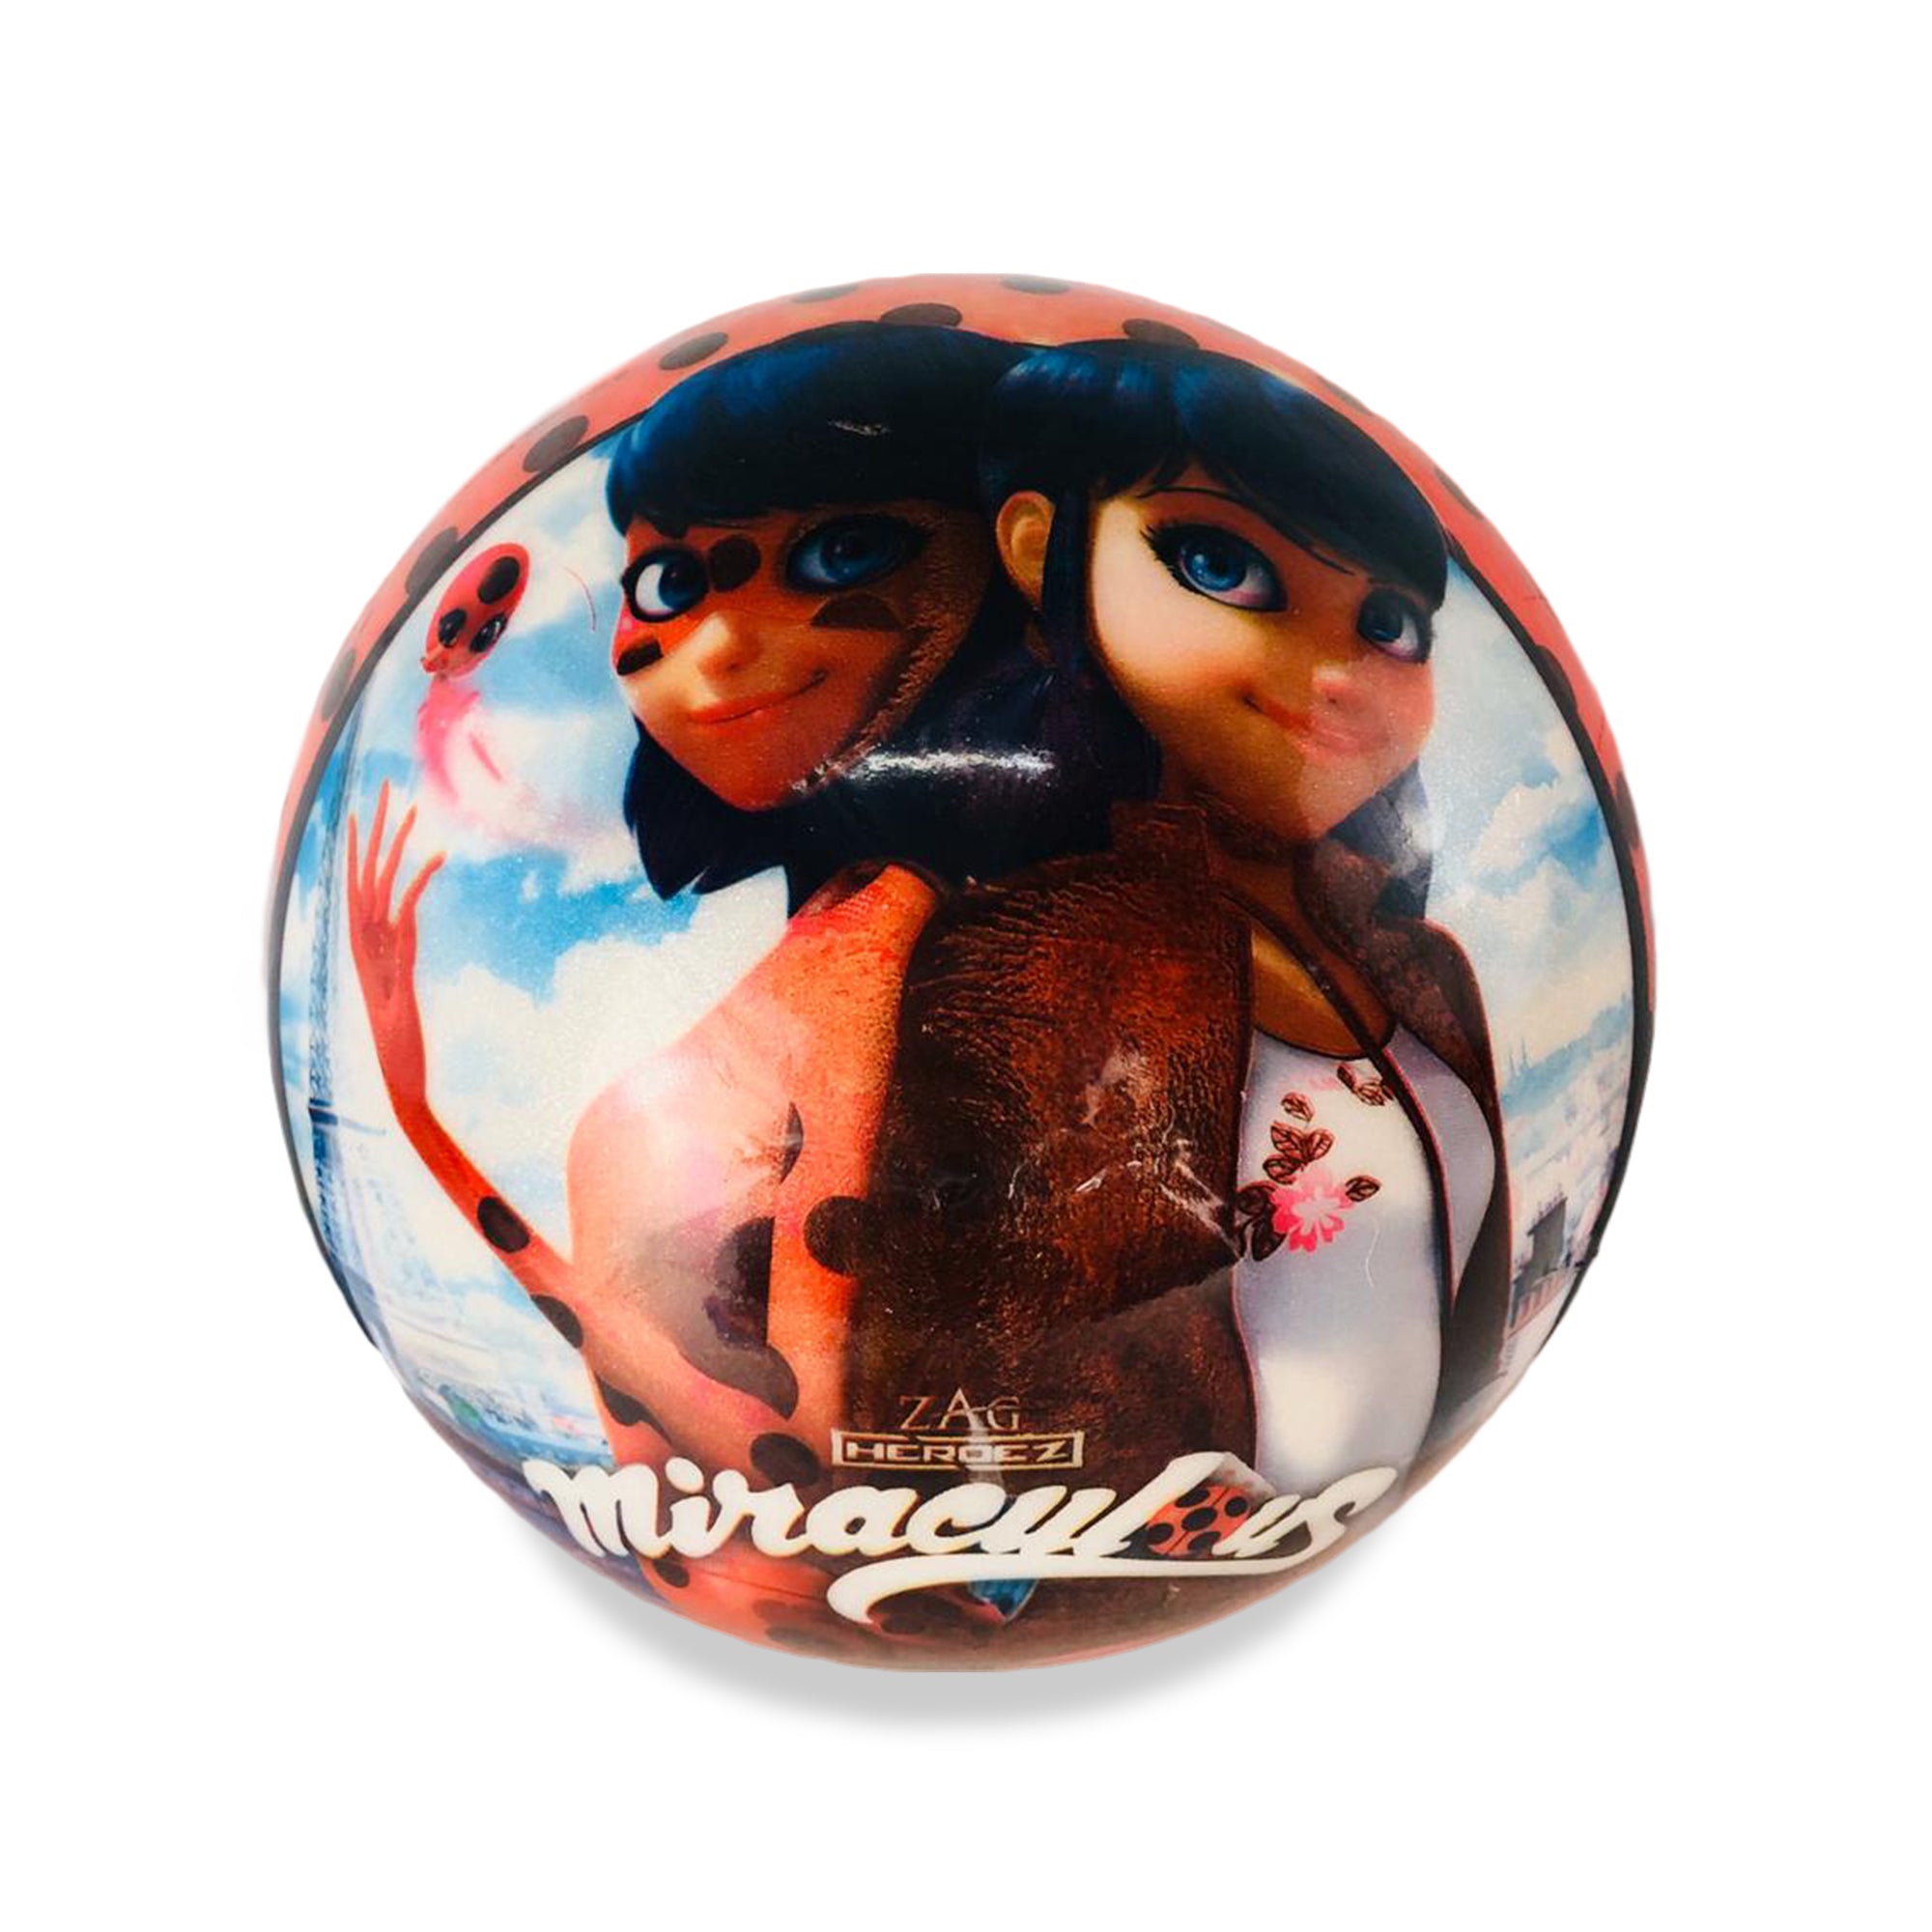 Pallone Miraculous palla da gioco per bambini cartoons Lady Bug 2750